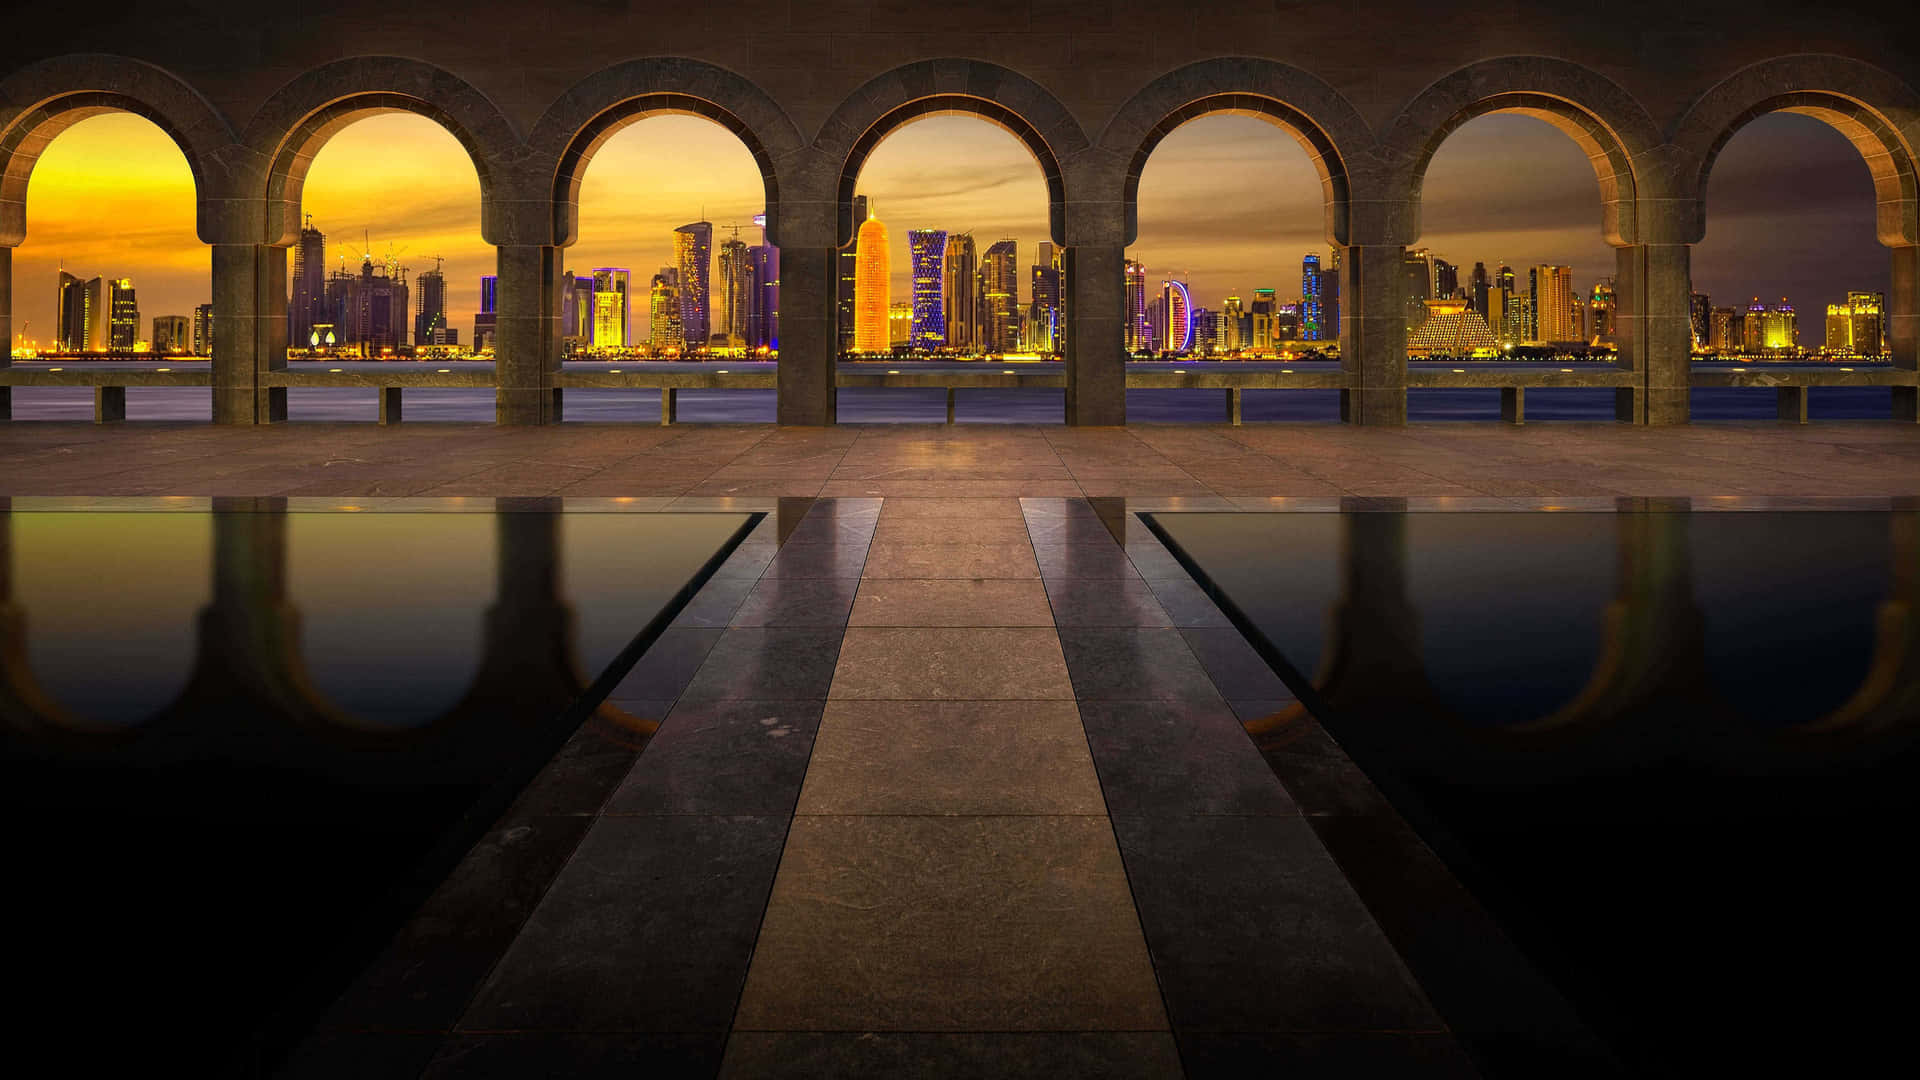 Etfantastisk Panorama Af Doha, Qatar Langs Det Arabiske Hav.